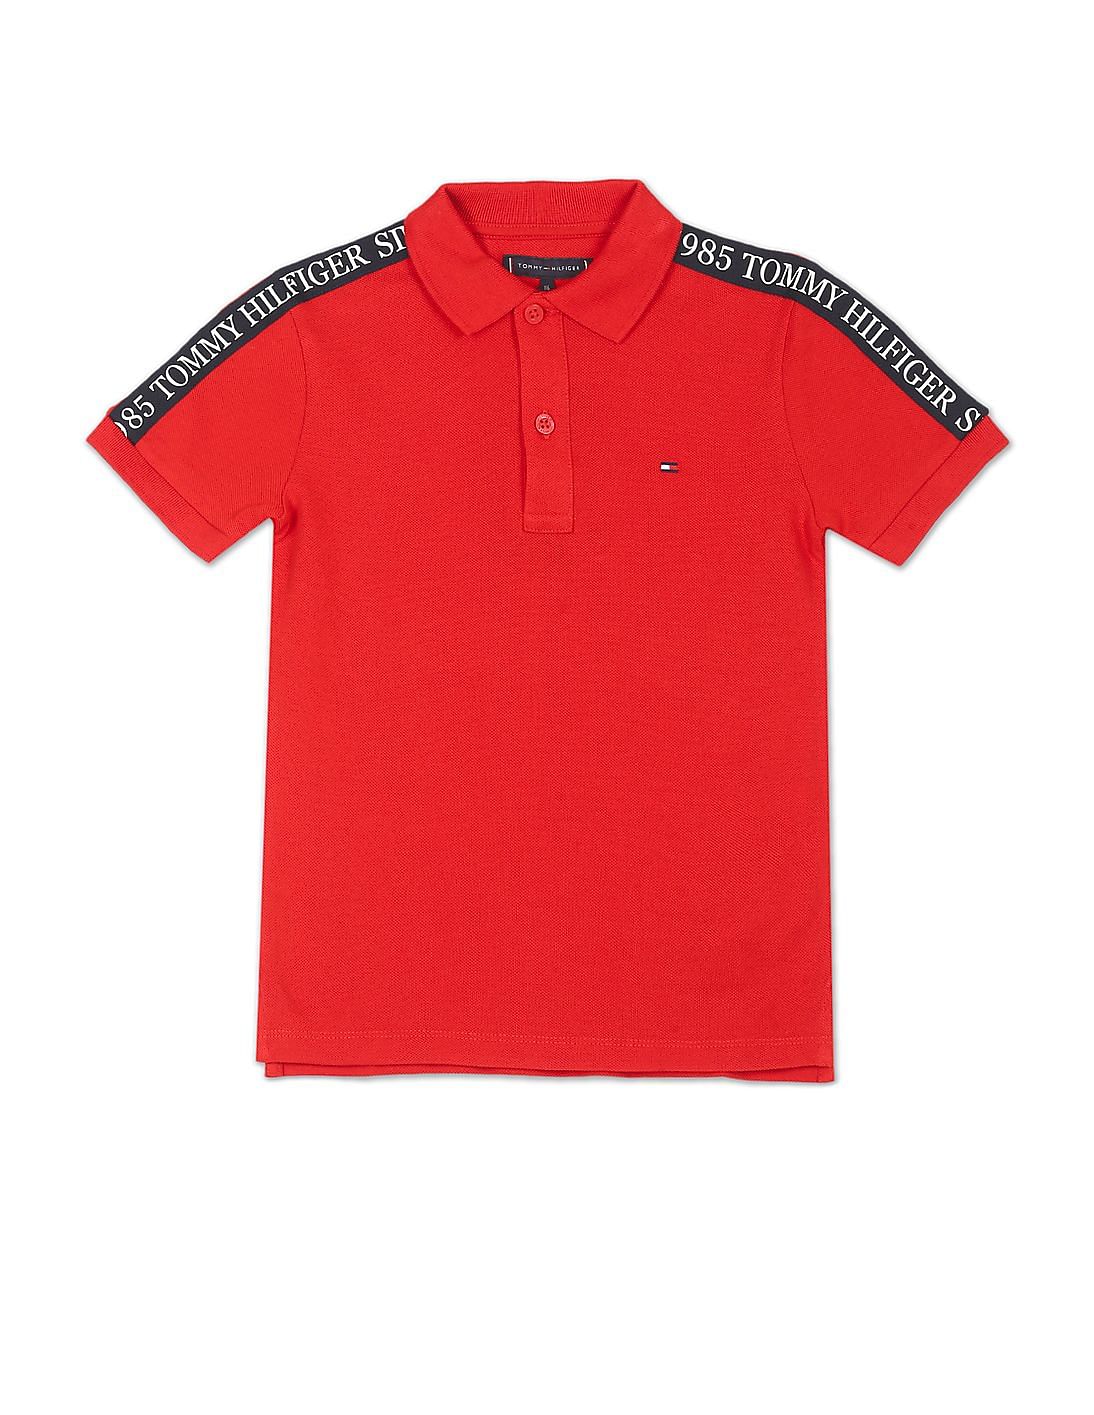 Buy Tommy Hilfiger Kids Boys Red Pique Brand Tape Polo Shirt - NNNOW.com